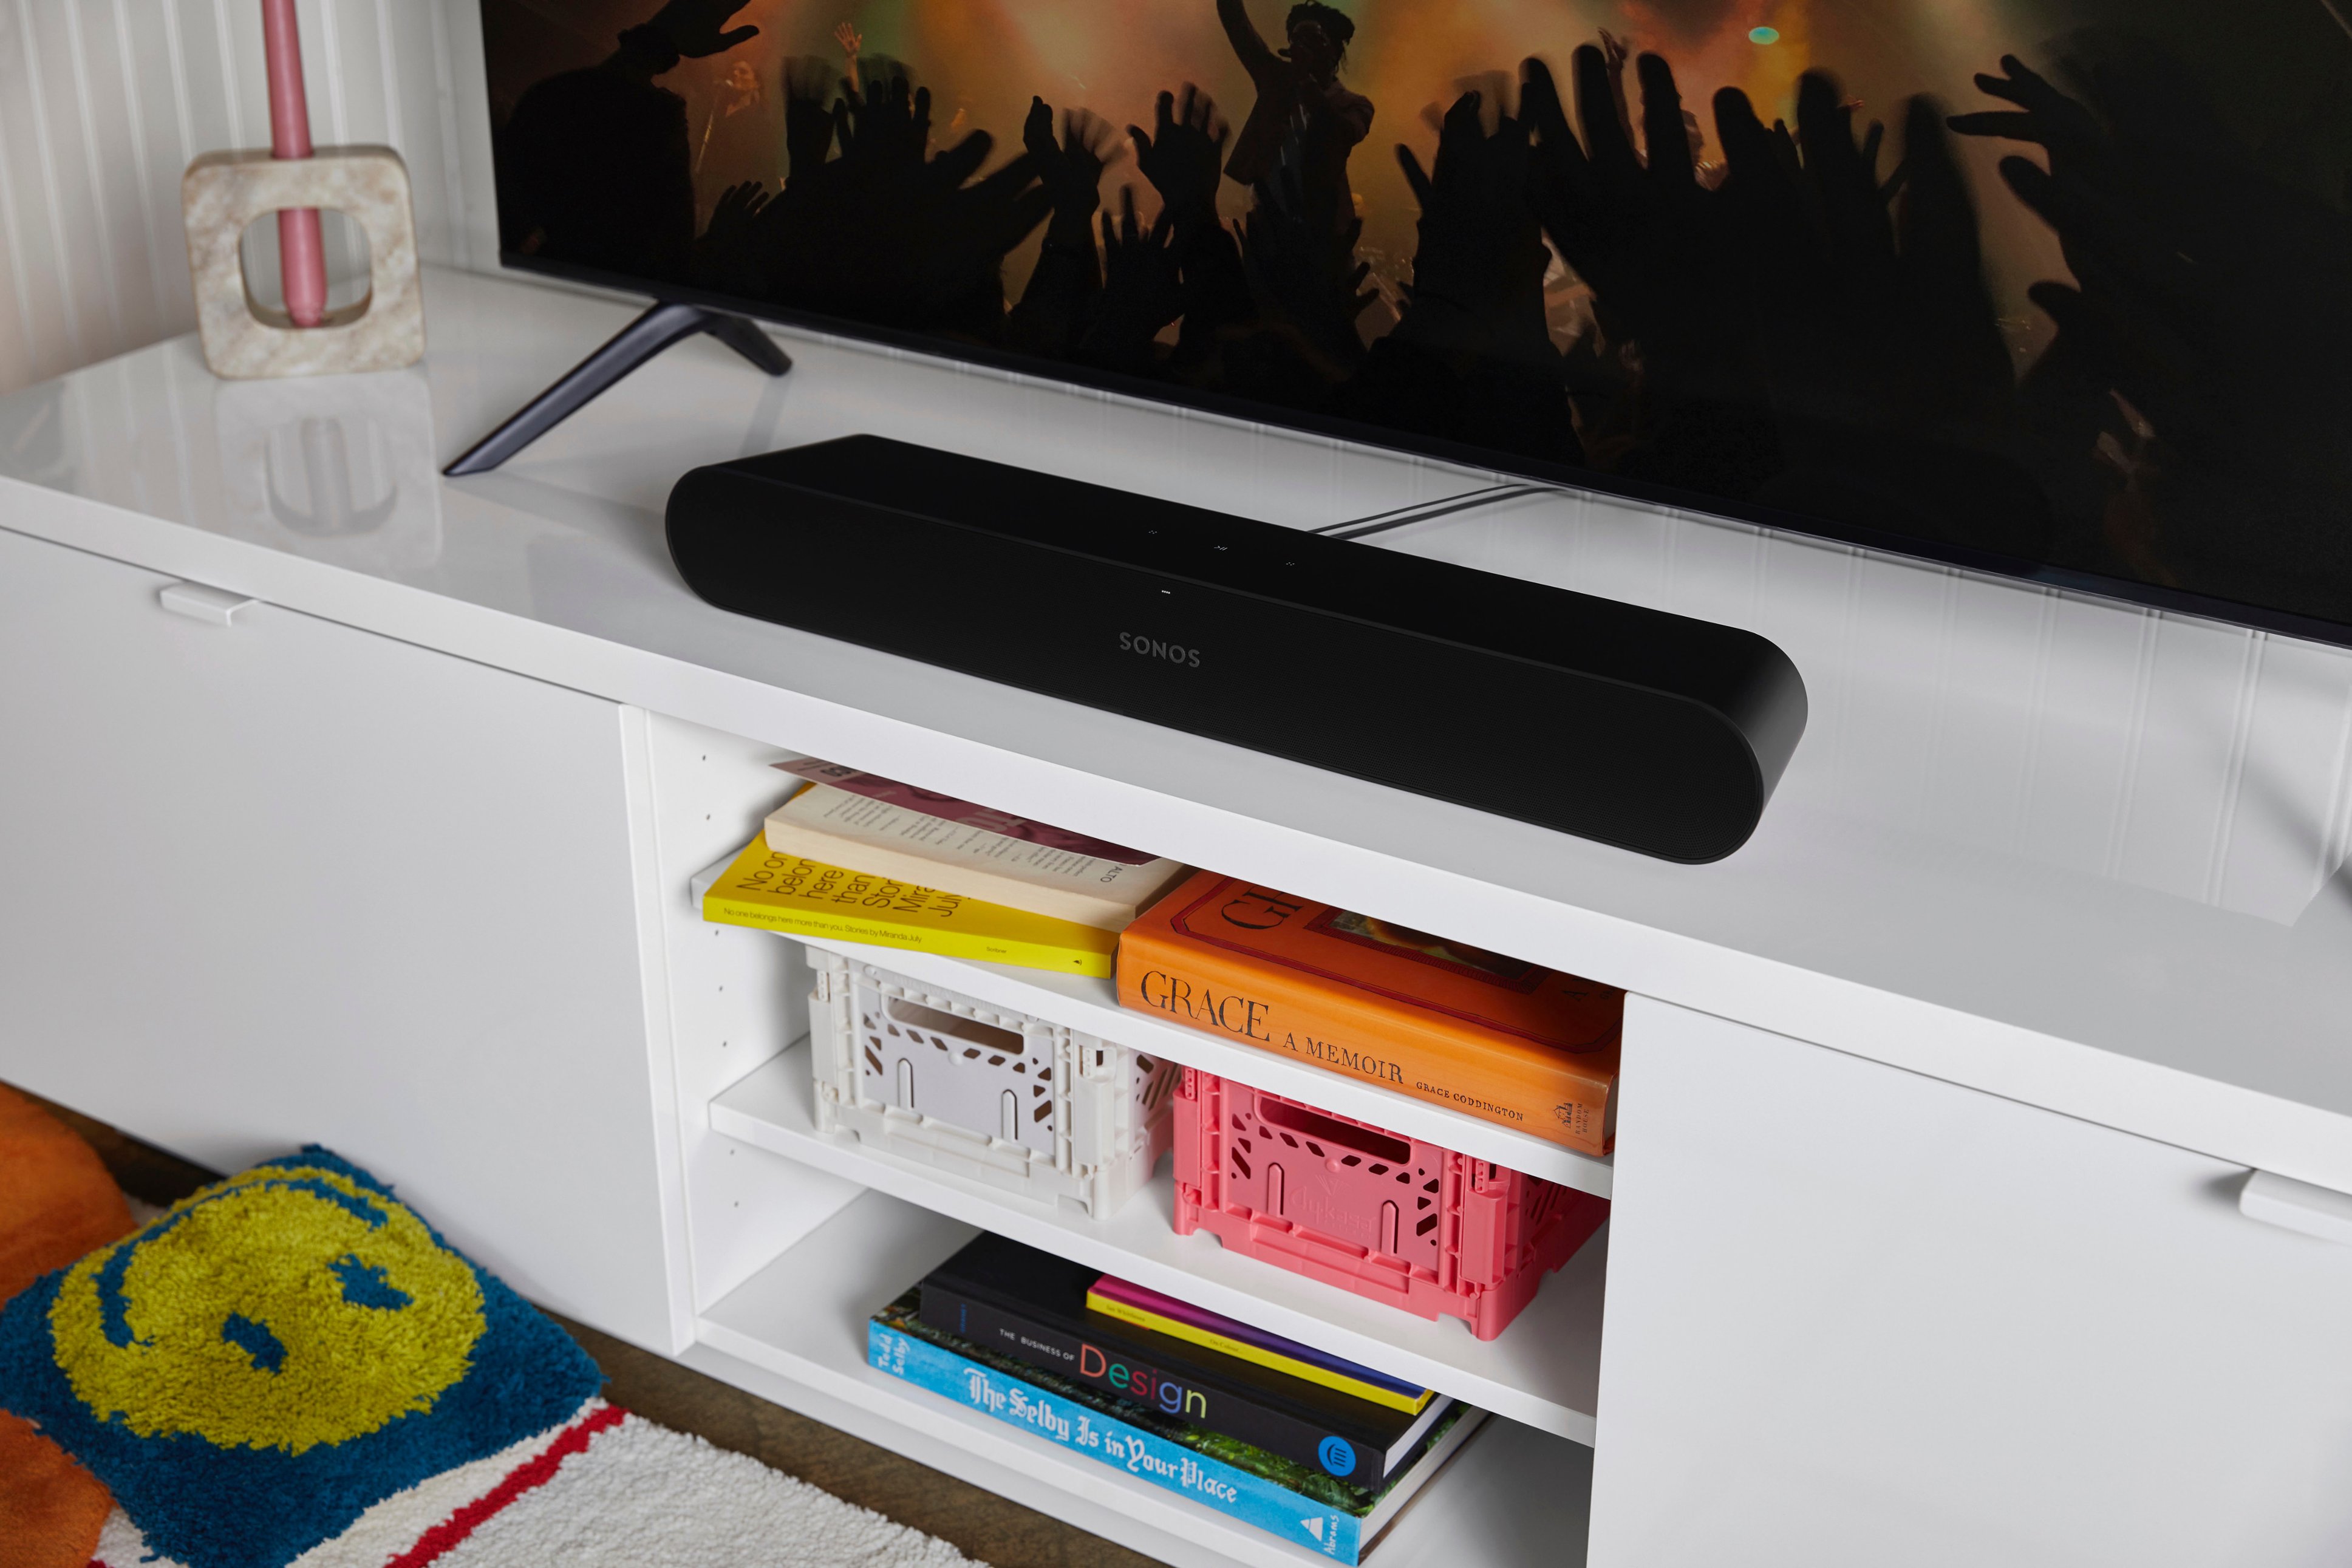 Sonos Ray Soundbar with Wi-Fi Black RAYG1US1BLK - Best Buy